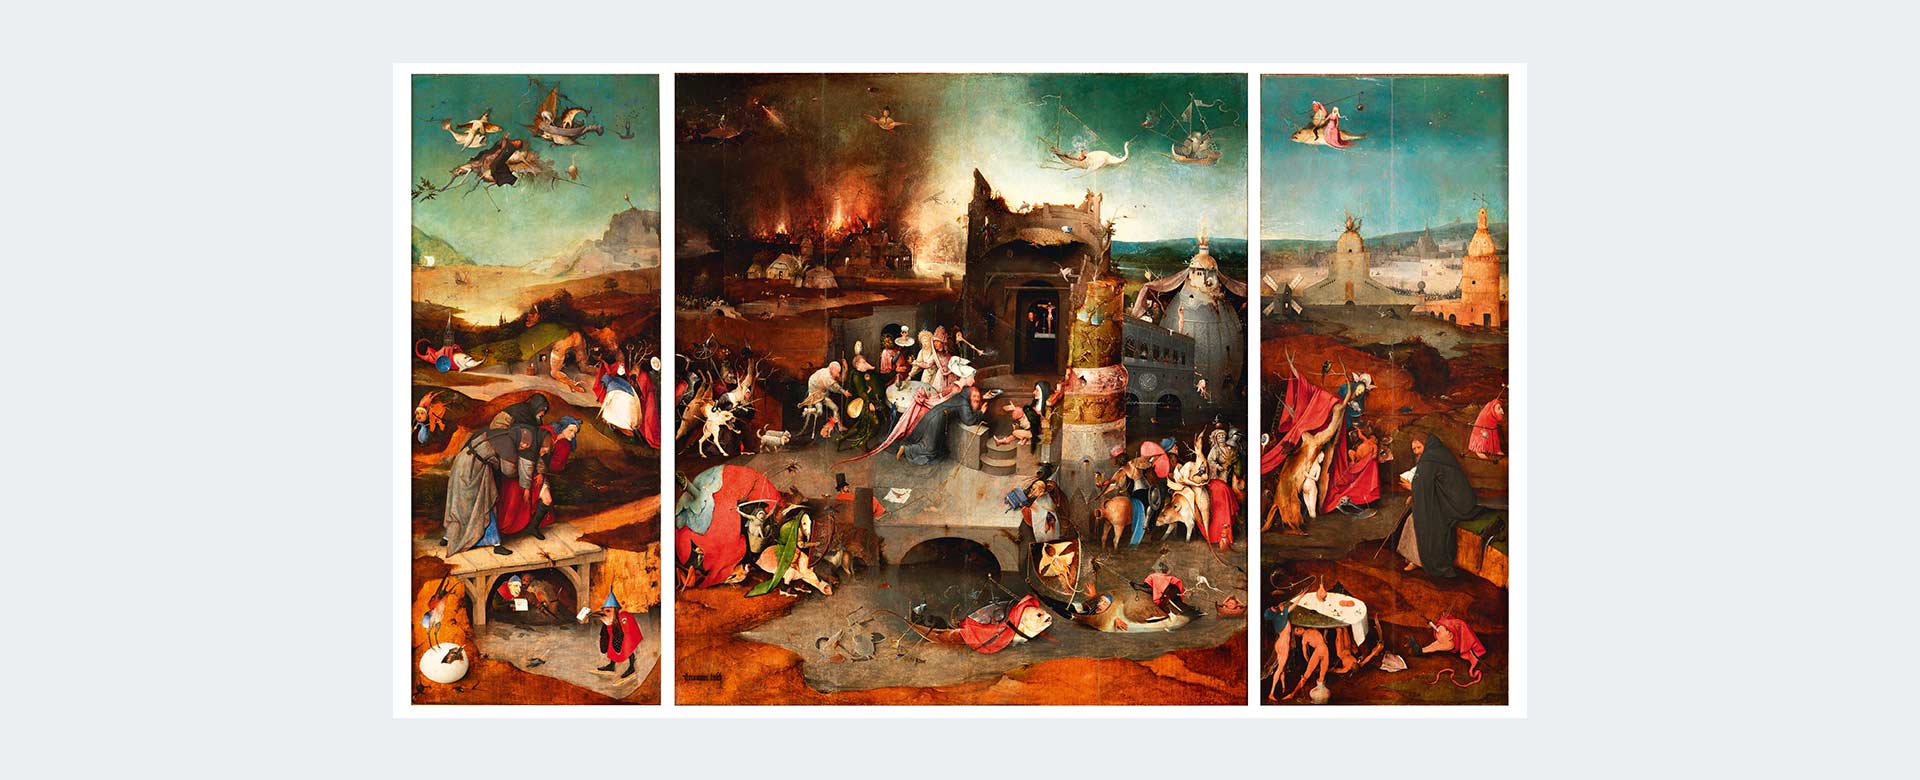 Jheronimus Bosch, Trittico delle Tentazioni di sant’Antonio (1500 circa) Lisbona, Museu Nacional de Arte Antiga © DGPC/Luísa Oliveira